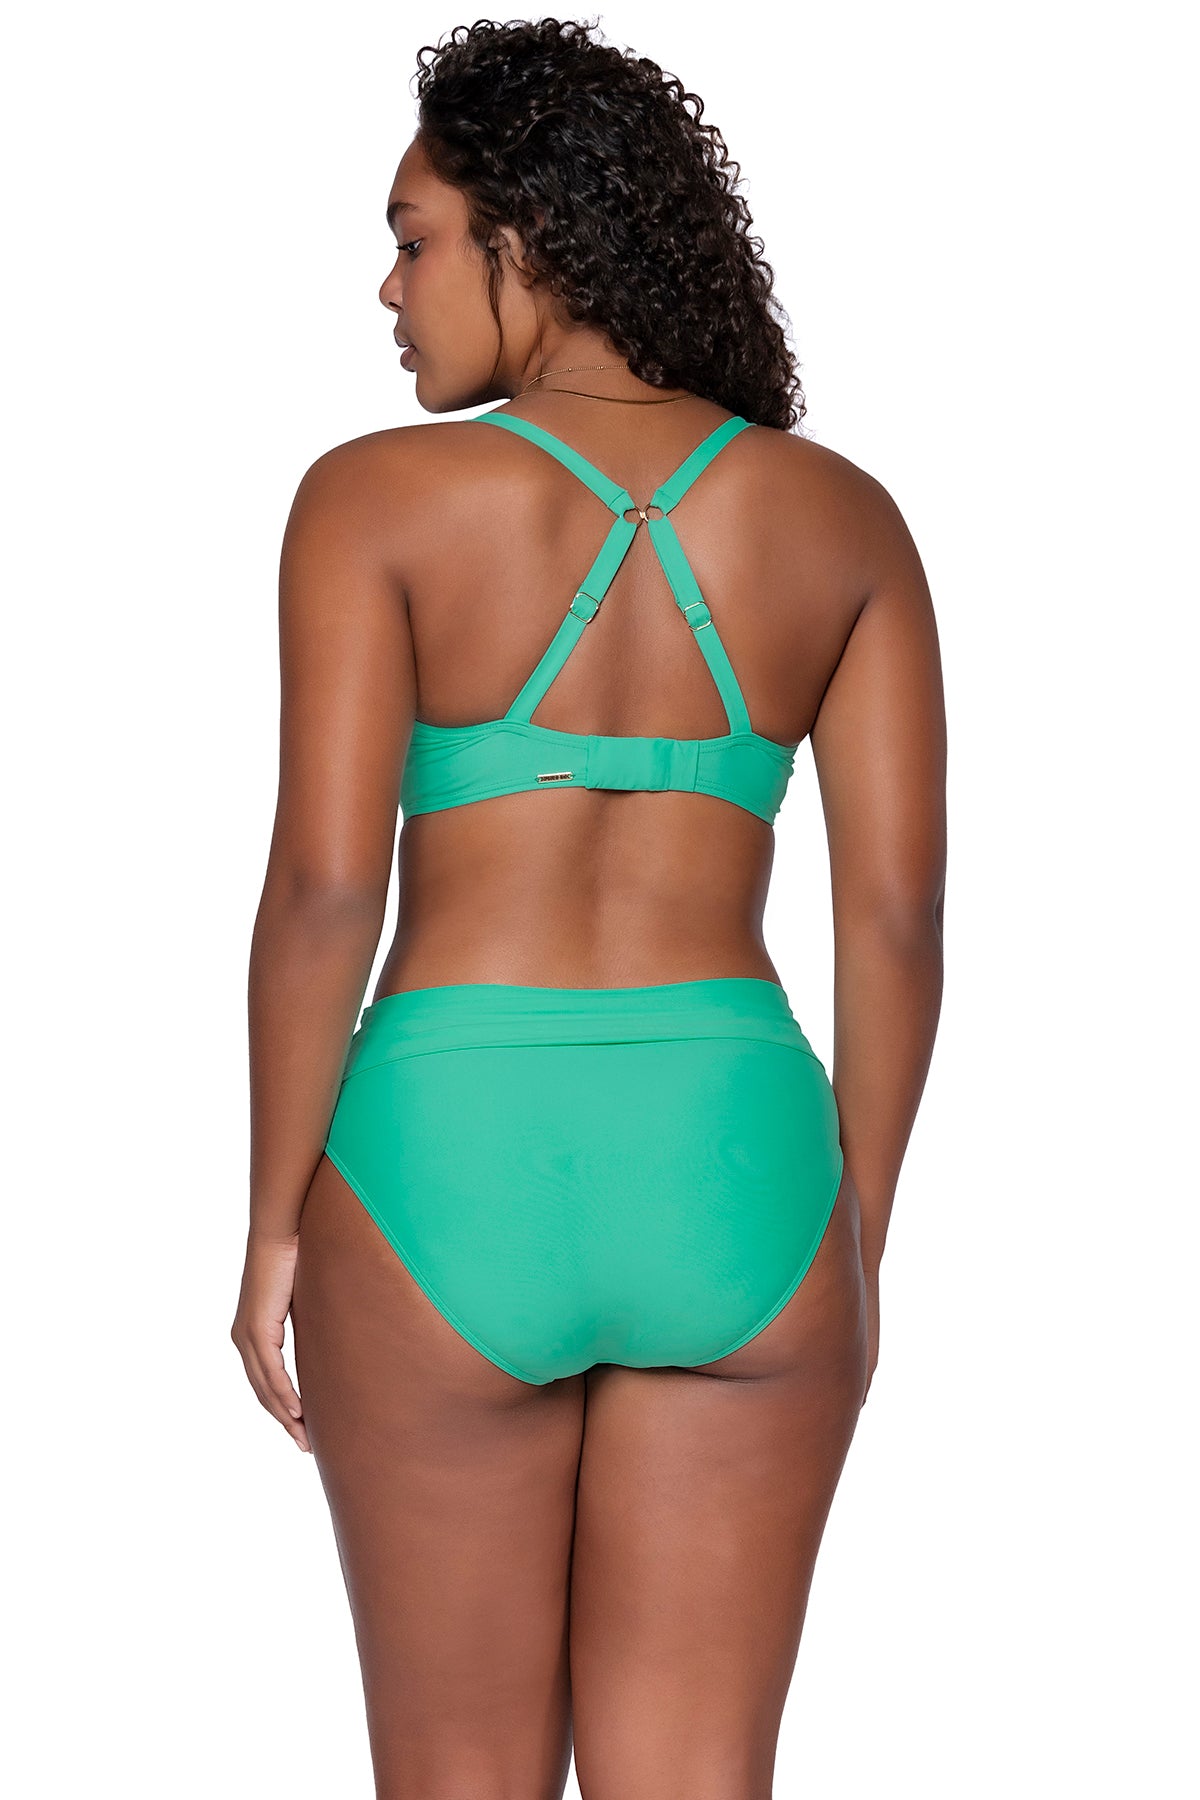 Back view of Sunsets Mint Kauai Keyhole bikini top showing racerback straps with Mint Hannah High Waist bikini bottom, featuring alternate model